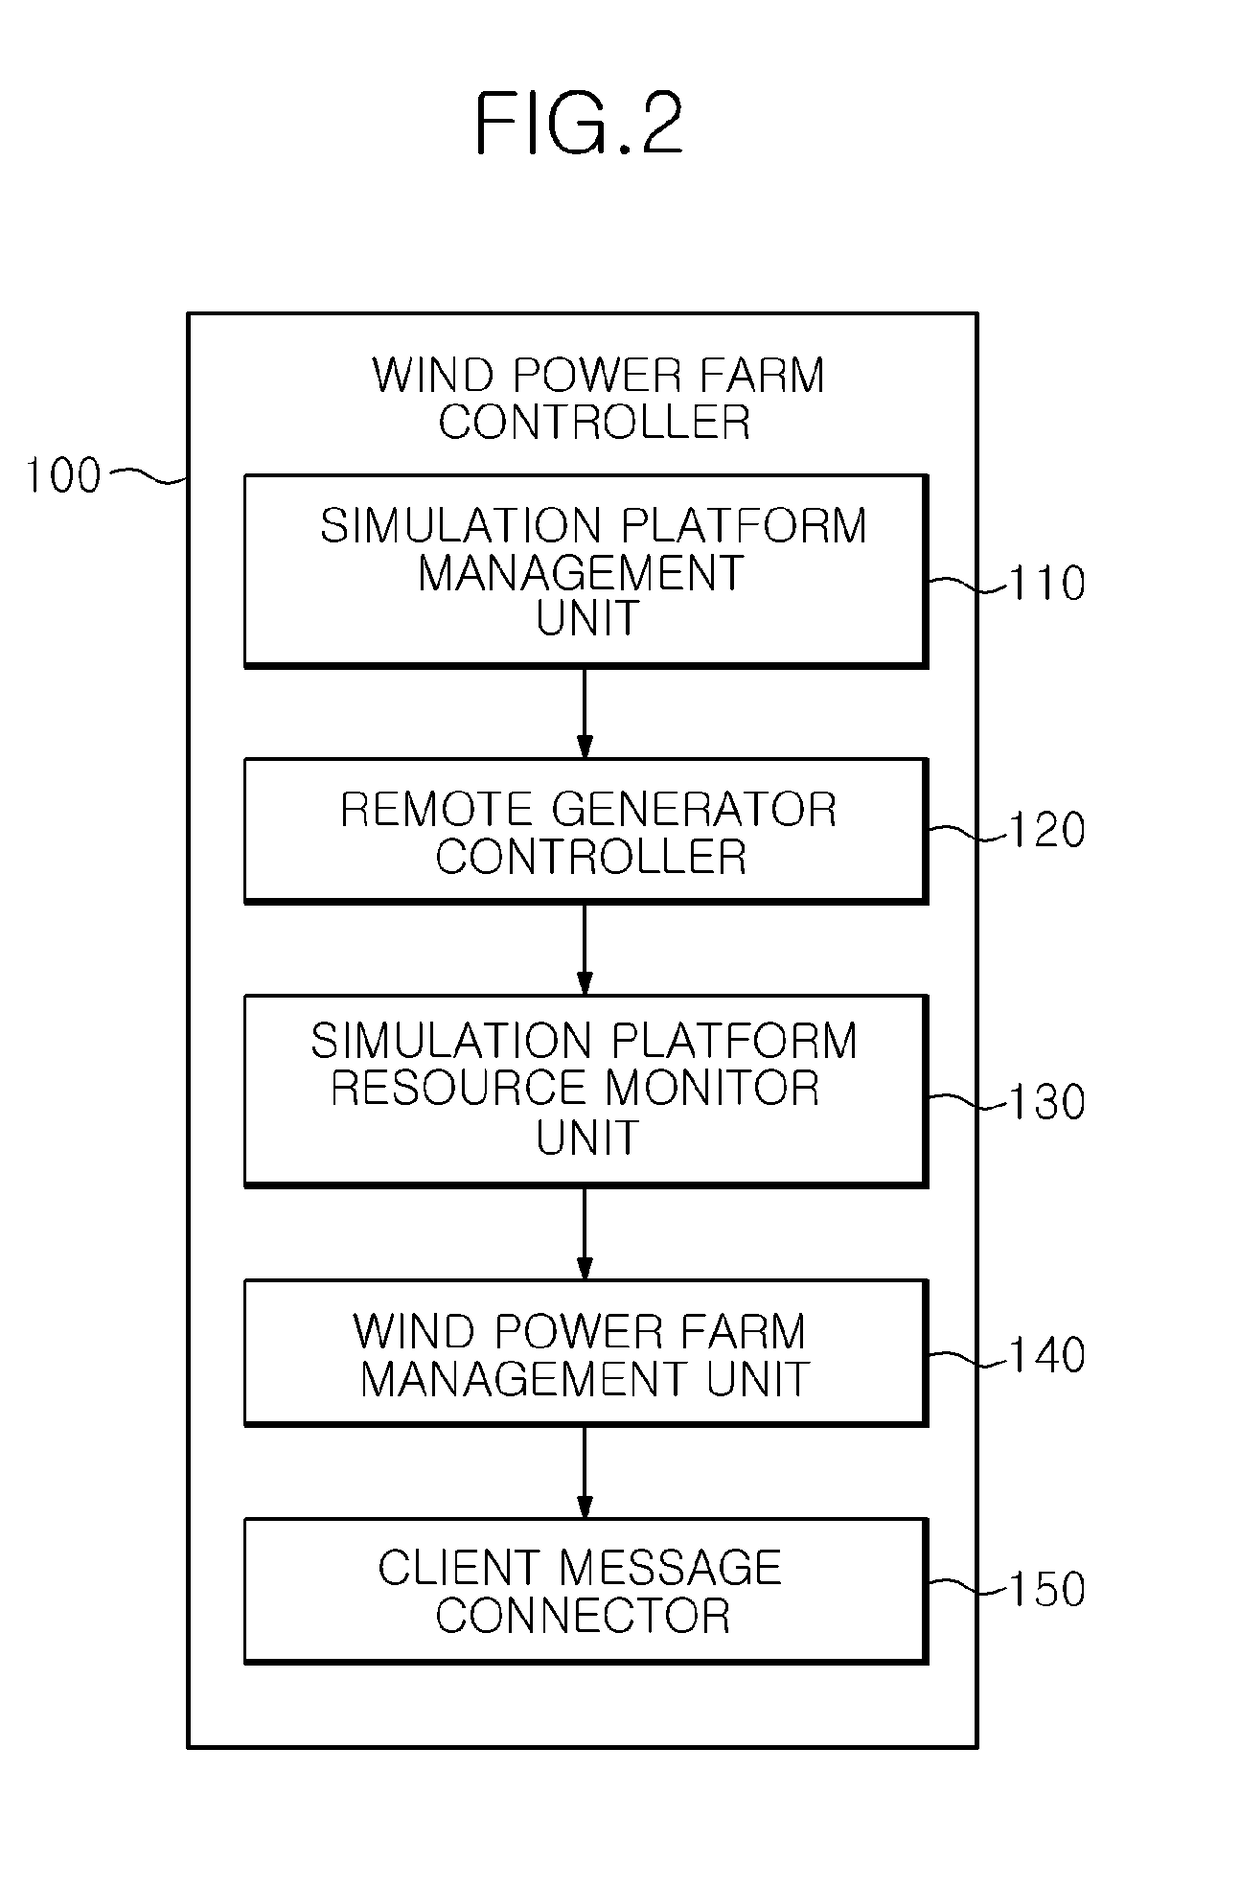 Apparatus for simulating wind power farm